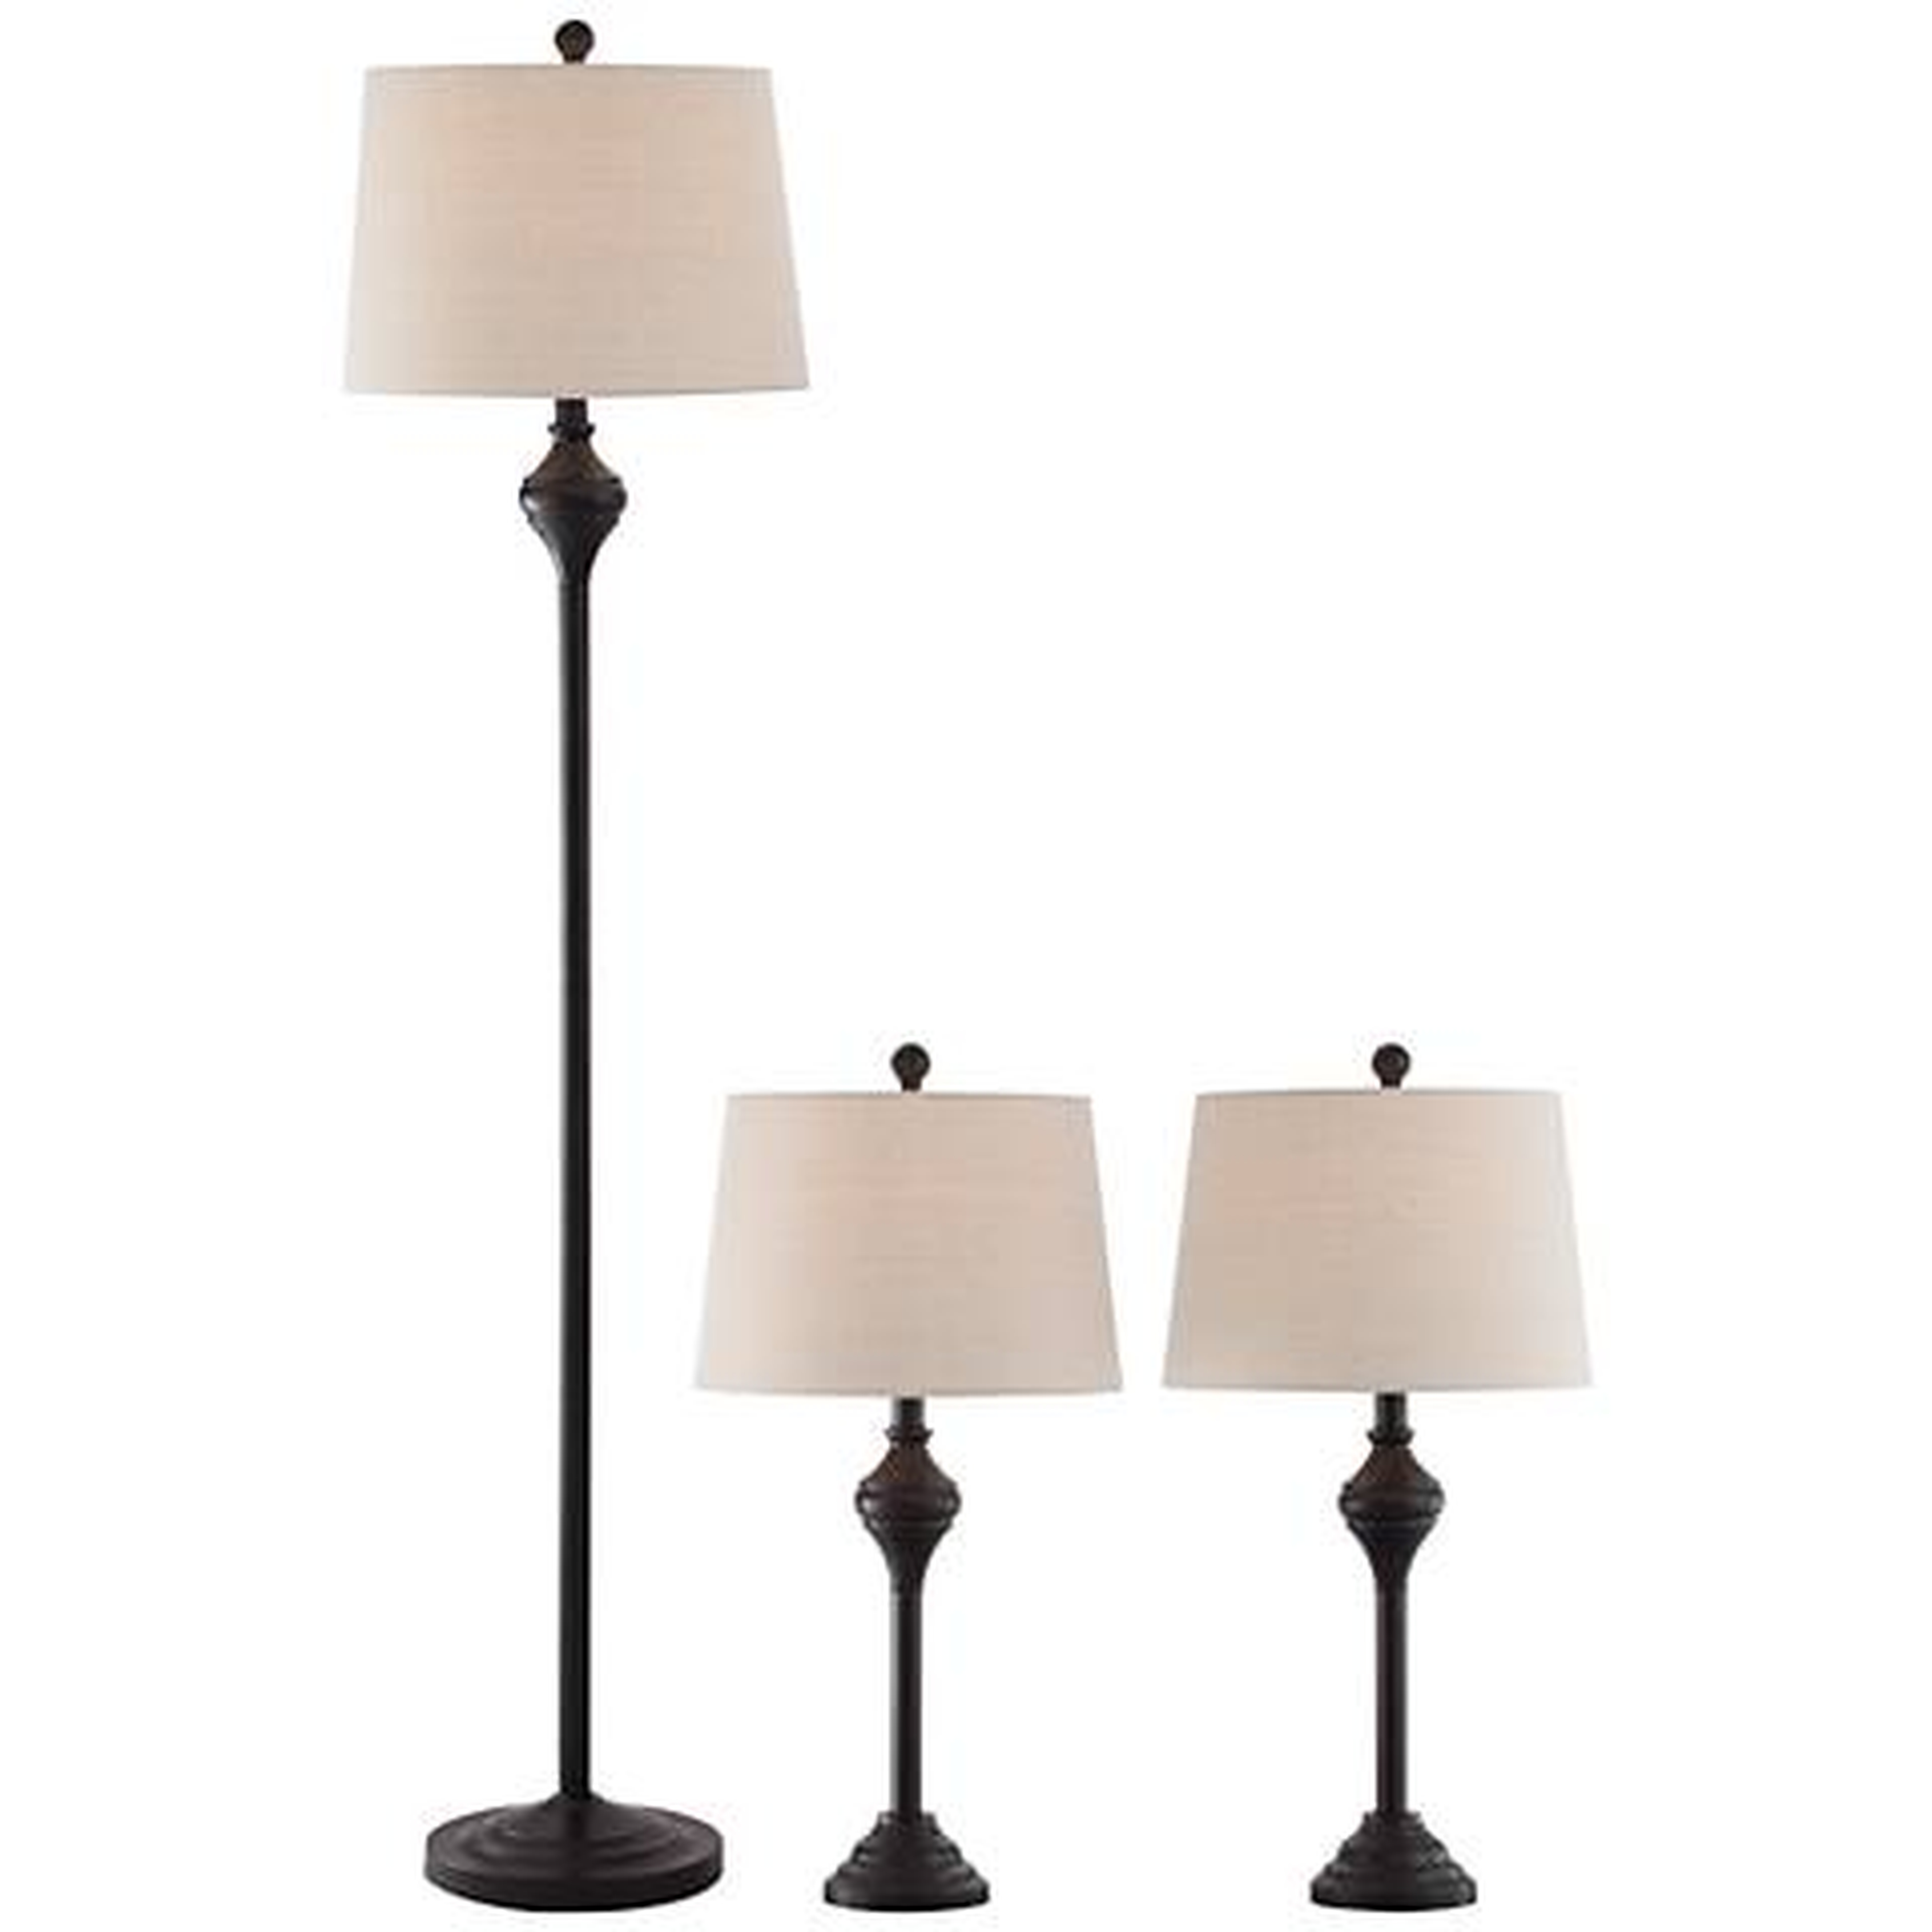 Mason Bronze Piece Floor and Table Lamp Set 3 - Lamps Plus